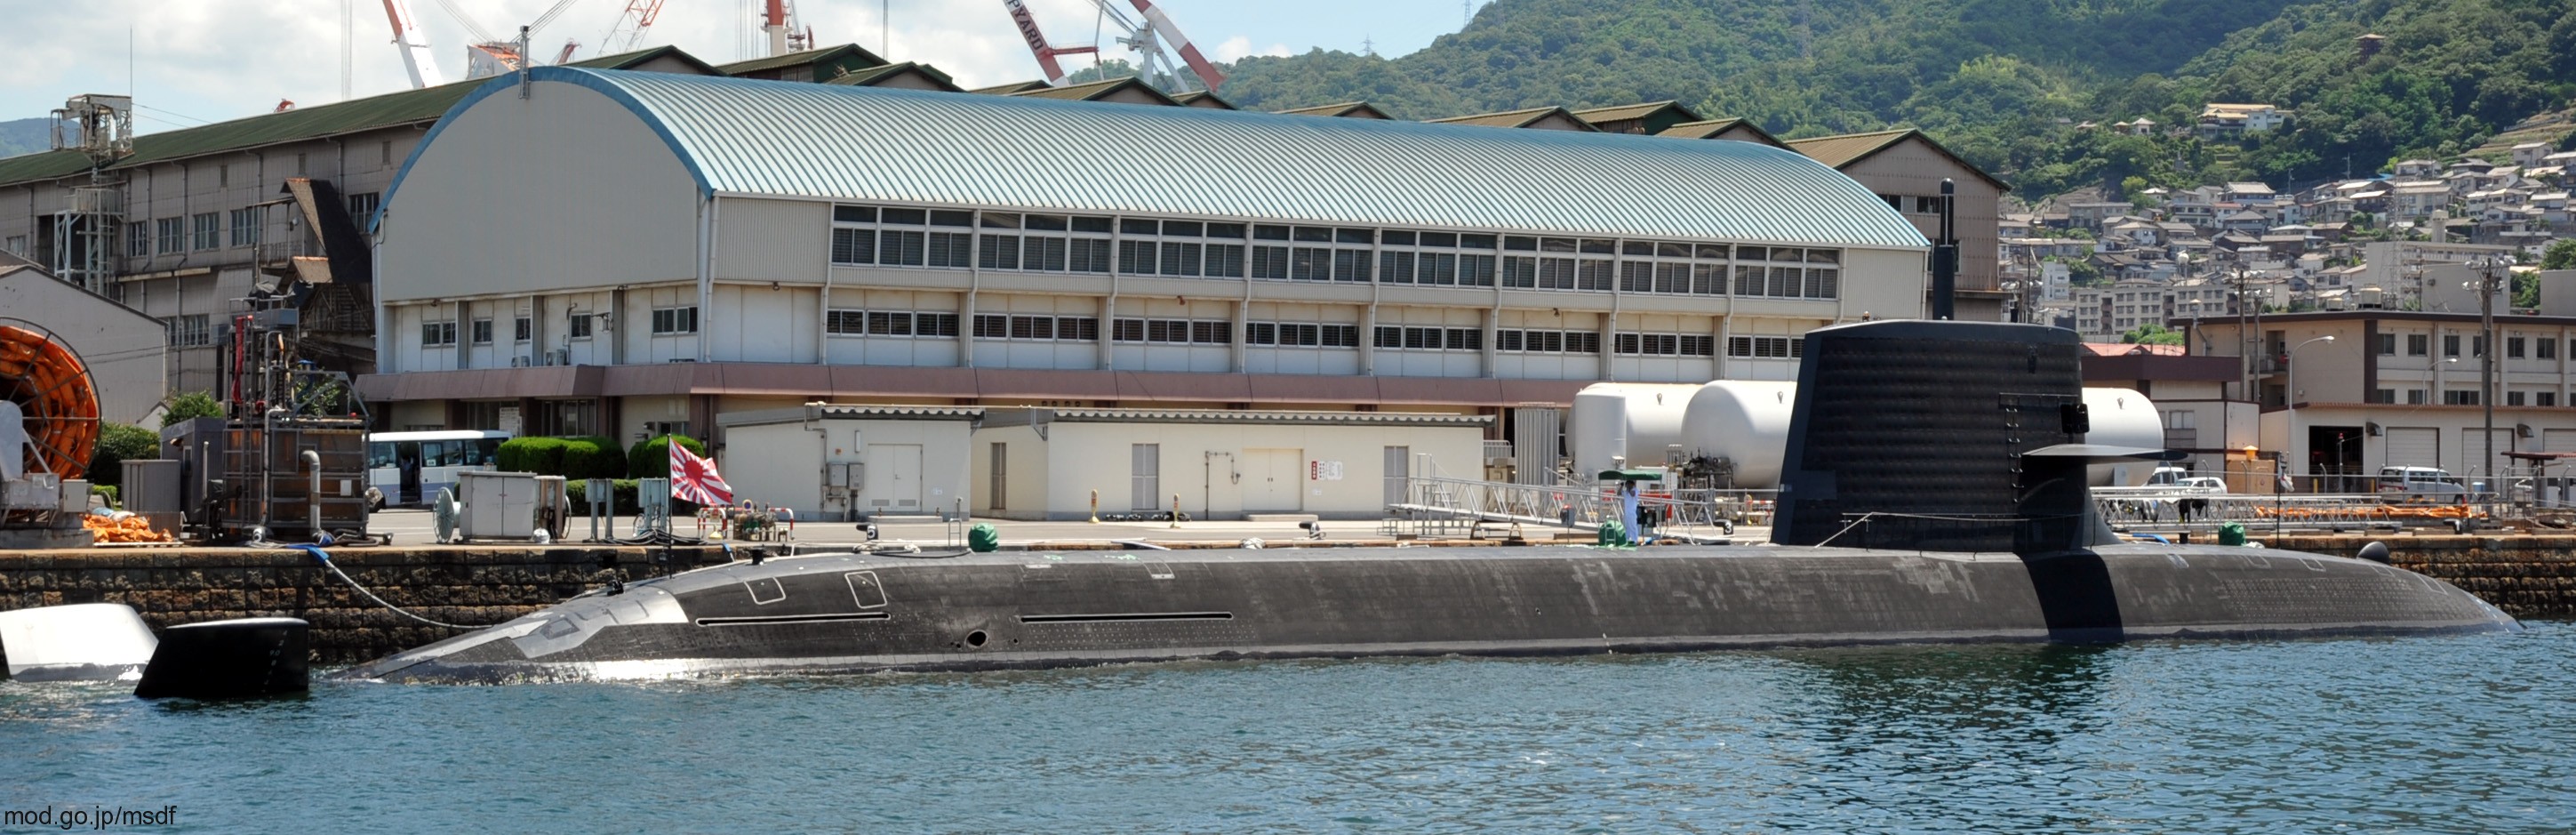 ss-503 js hakuryu 16ss soryu class attack submarine ssk japan maritime self defense force jmsdf 02